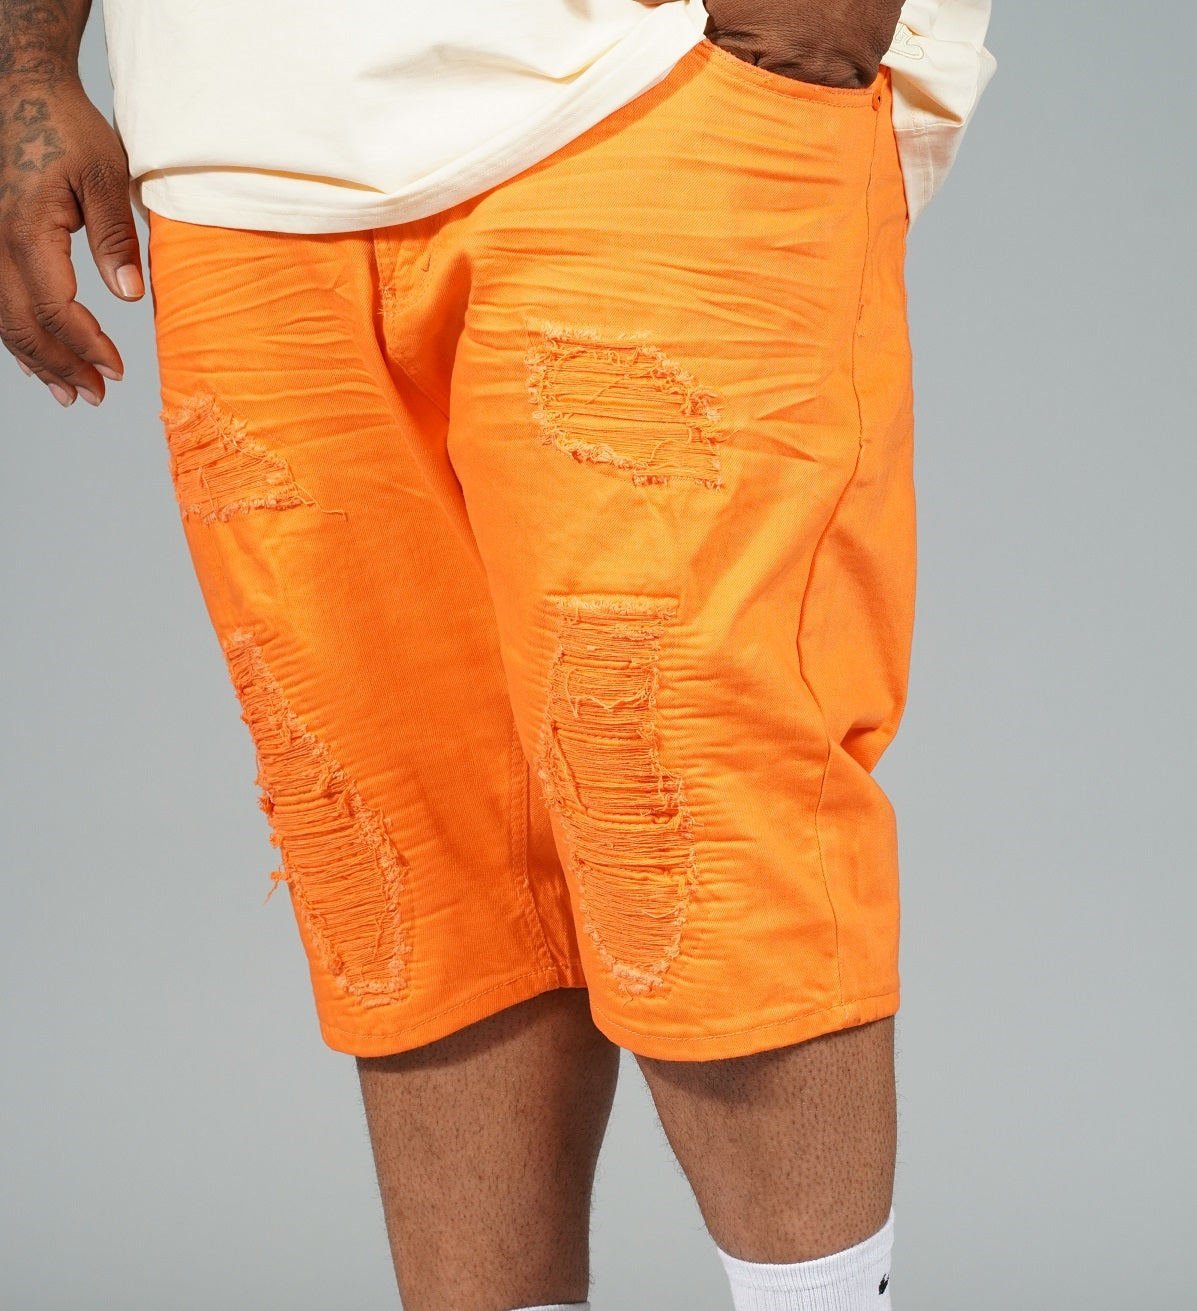 M971 Jordanelle Twill Shorts - Orange